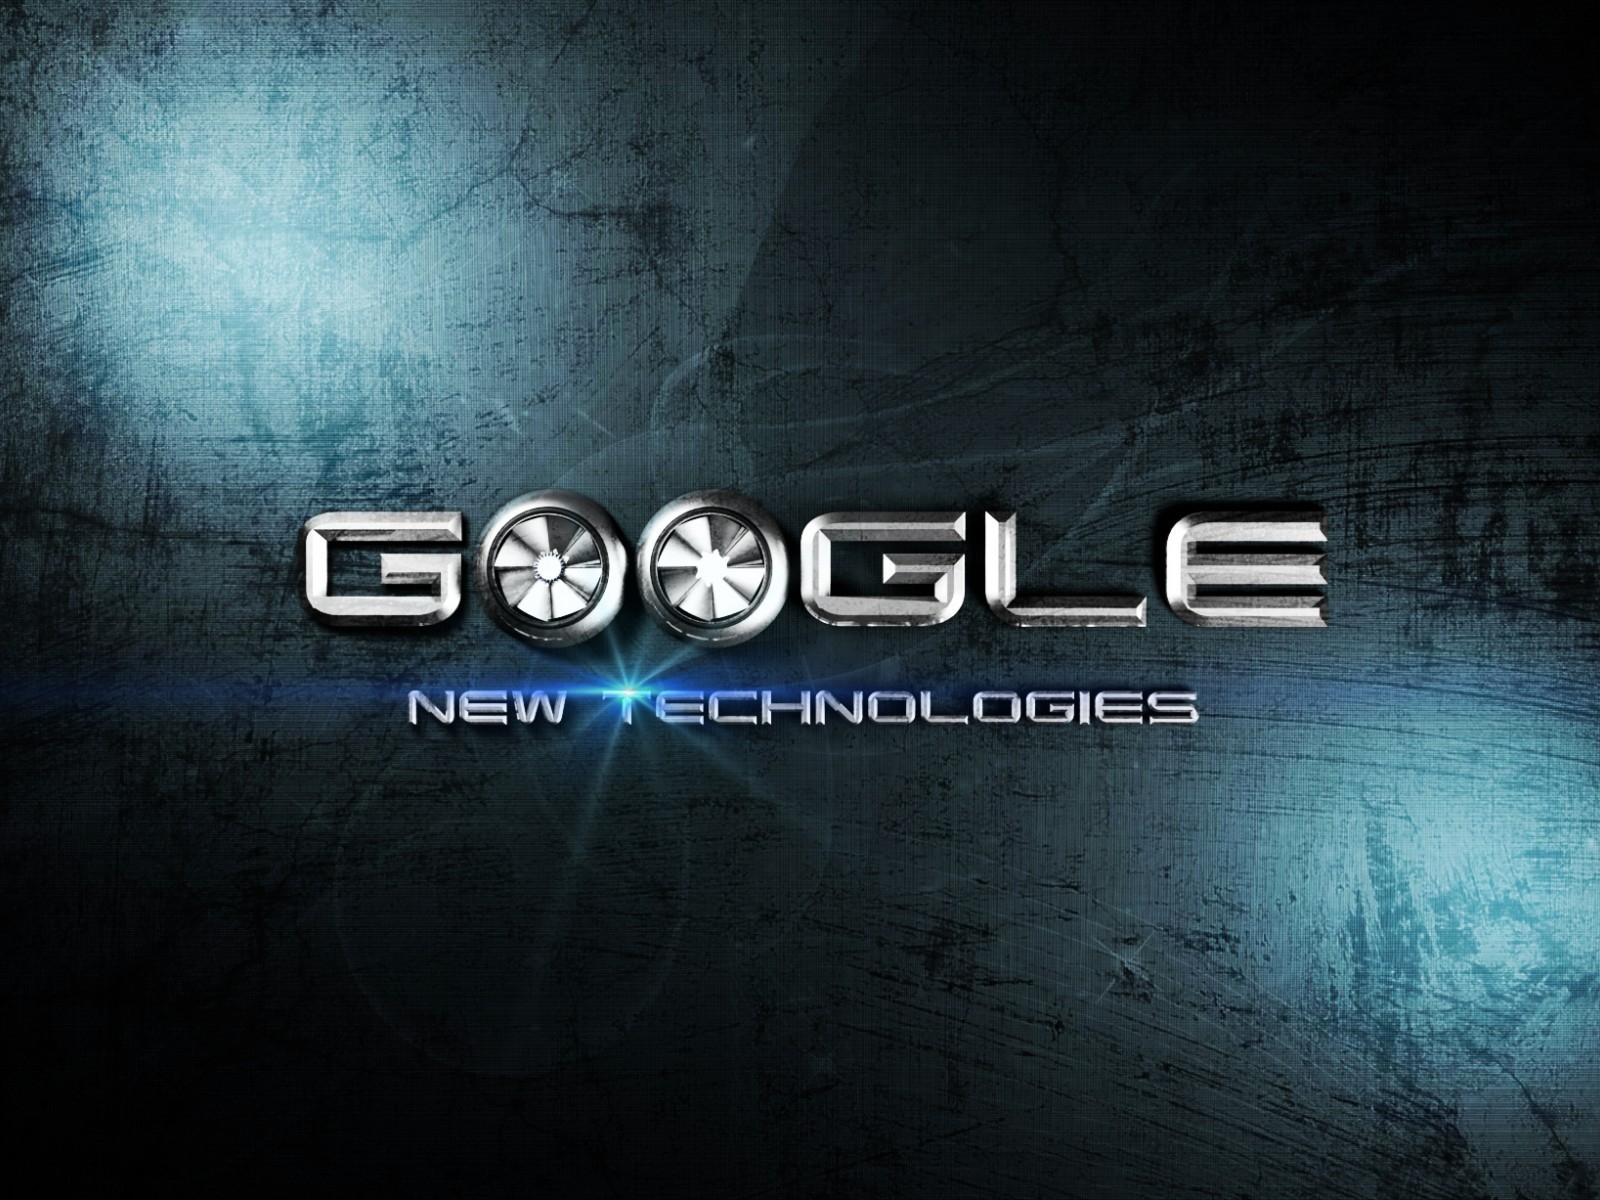 Google Innovative Logo for 1600 x 1200 resolution